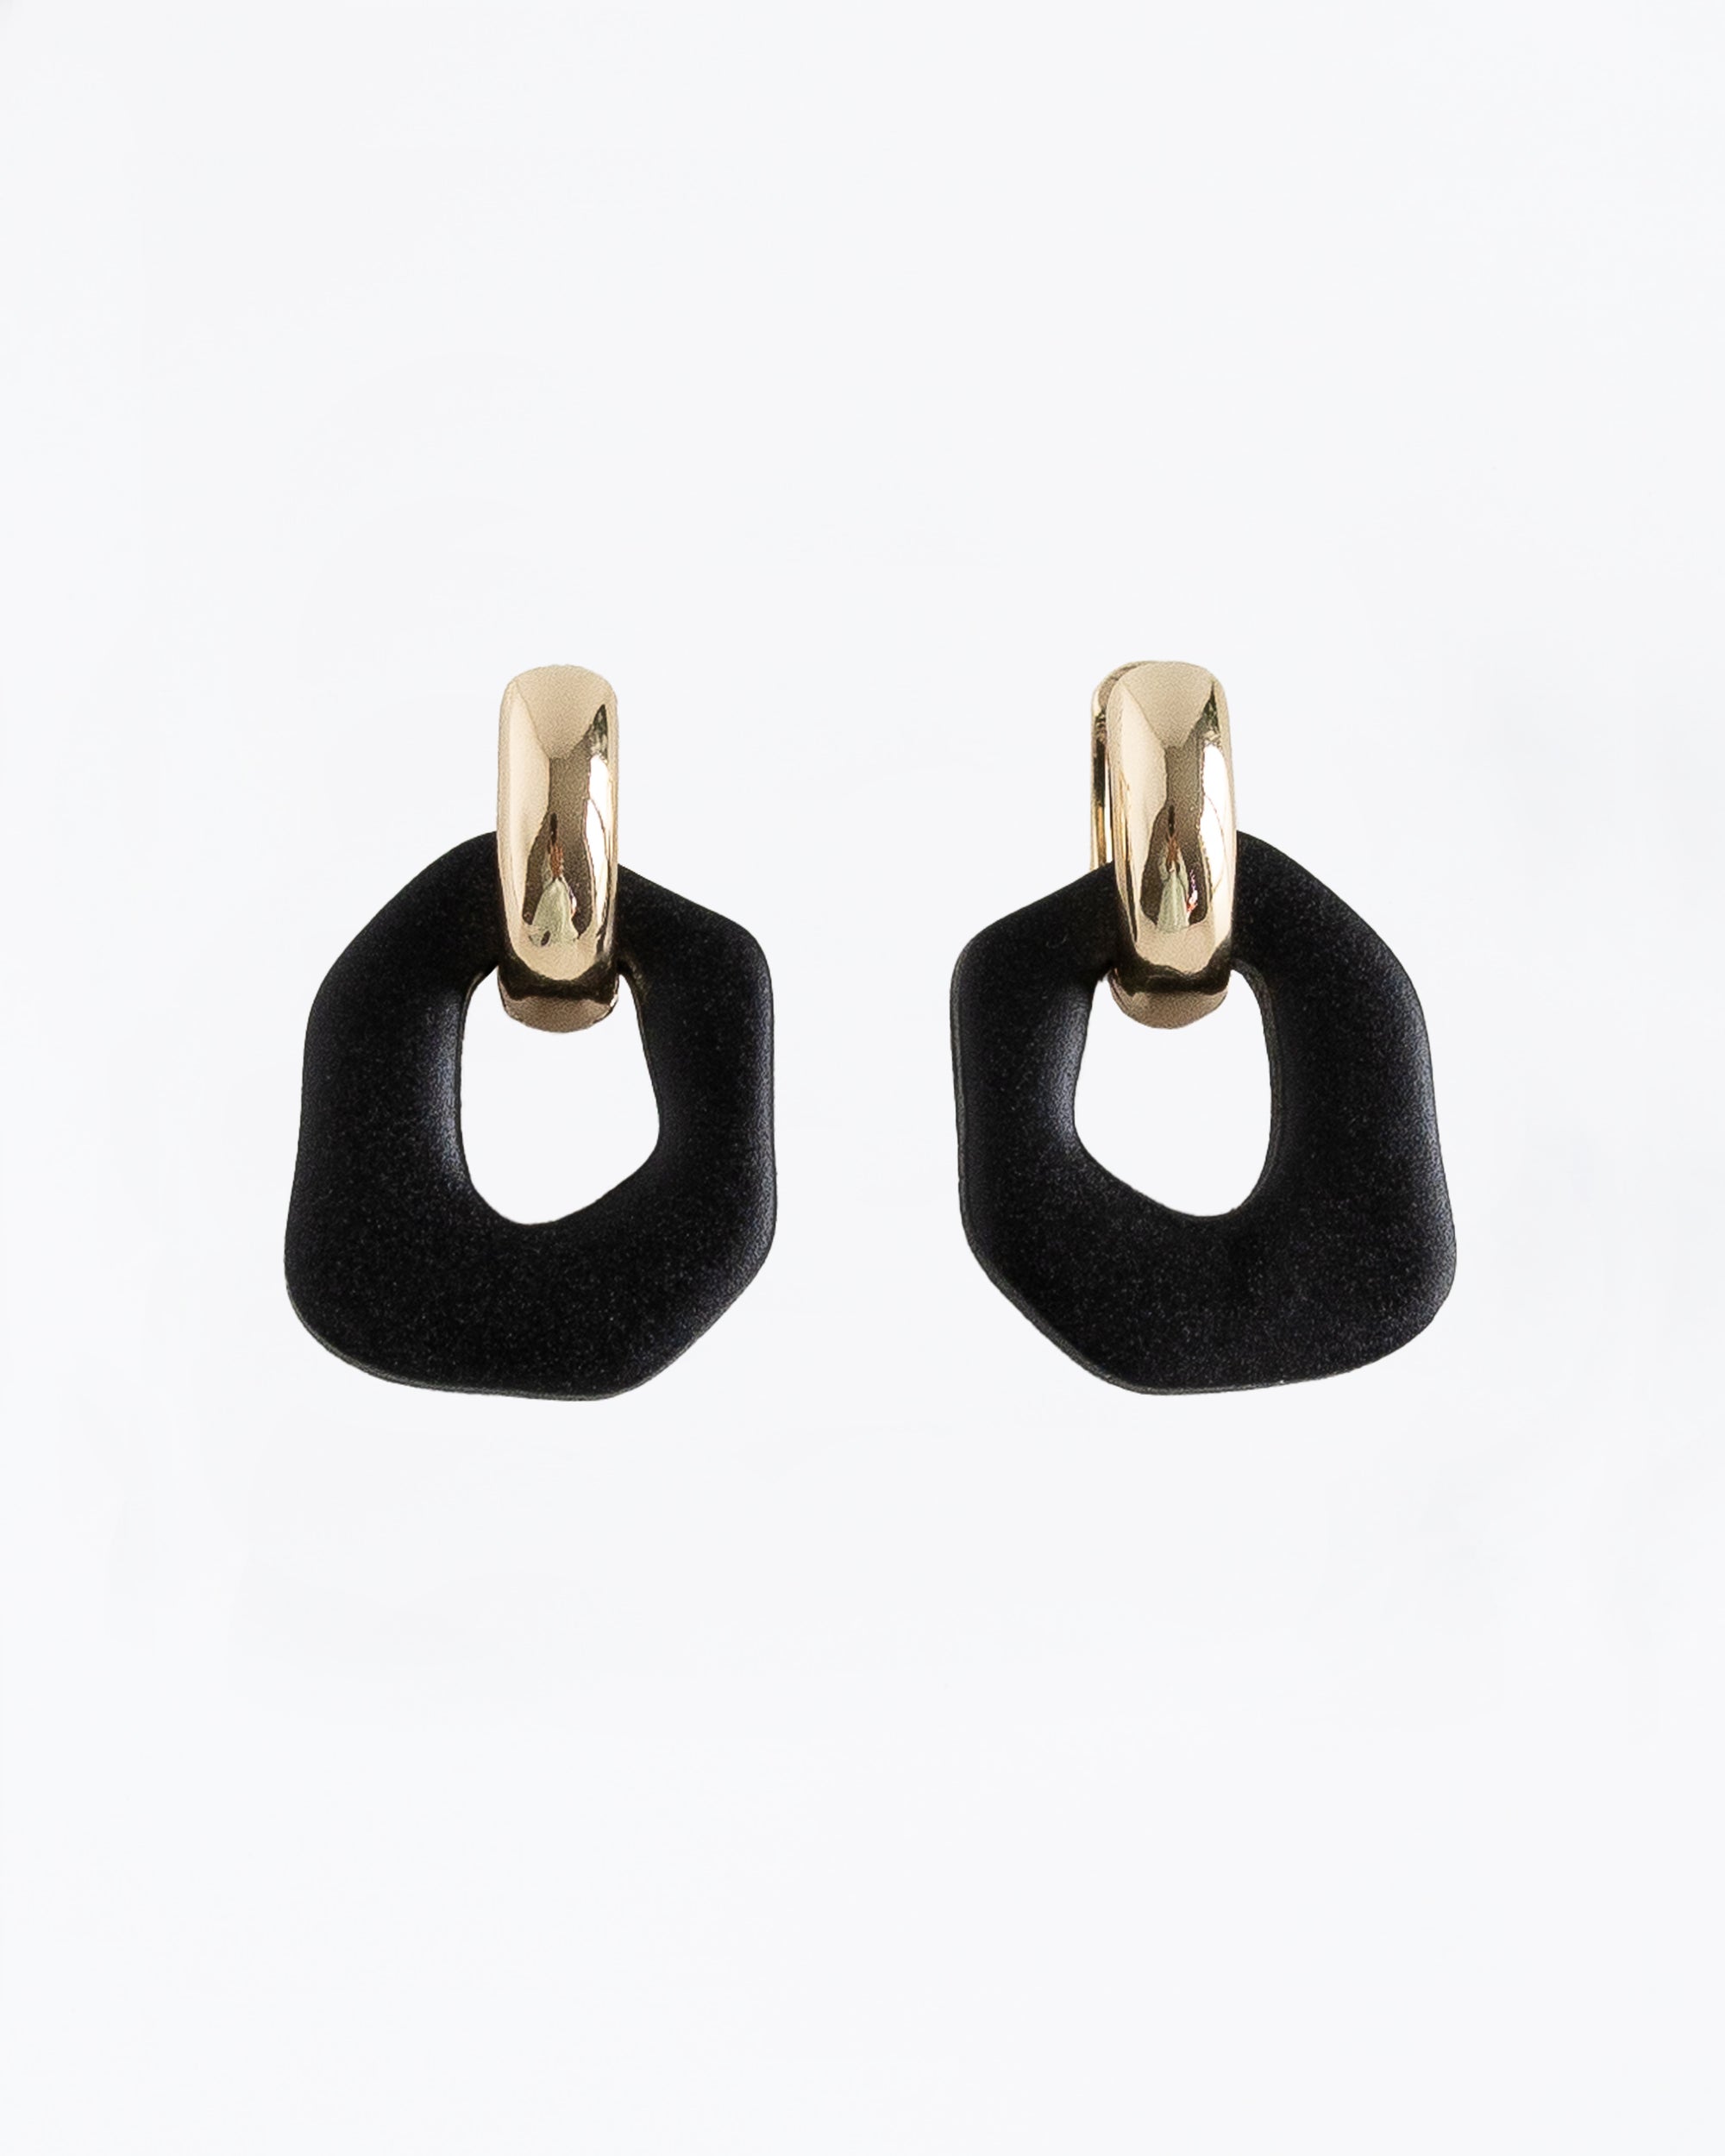 Close-up of Darien earrings in Black with gold hoops